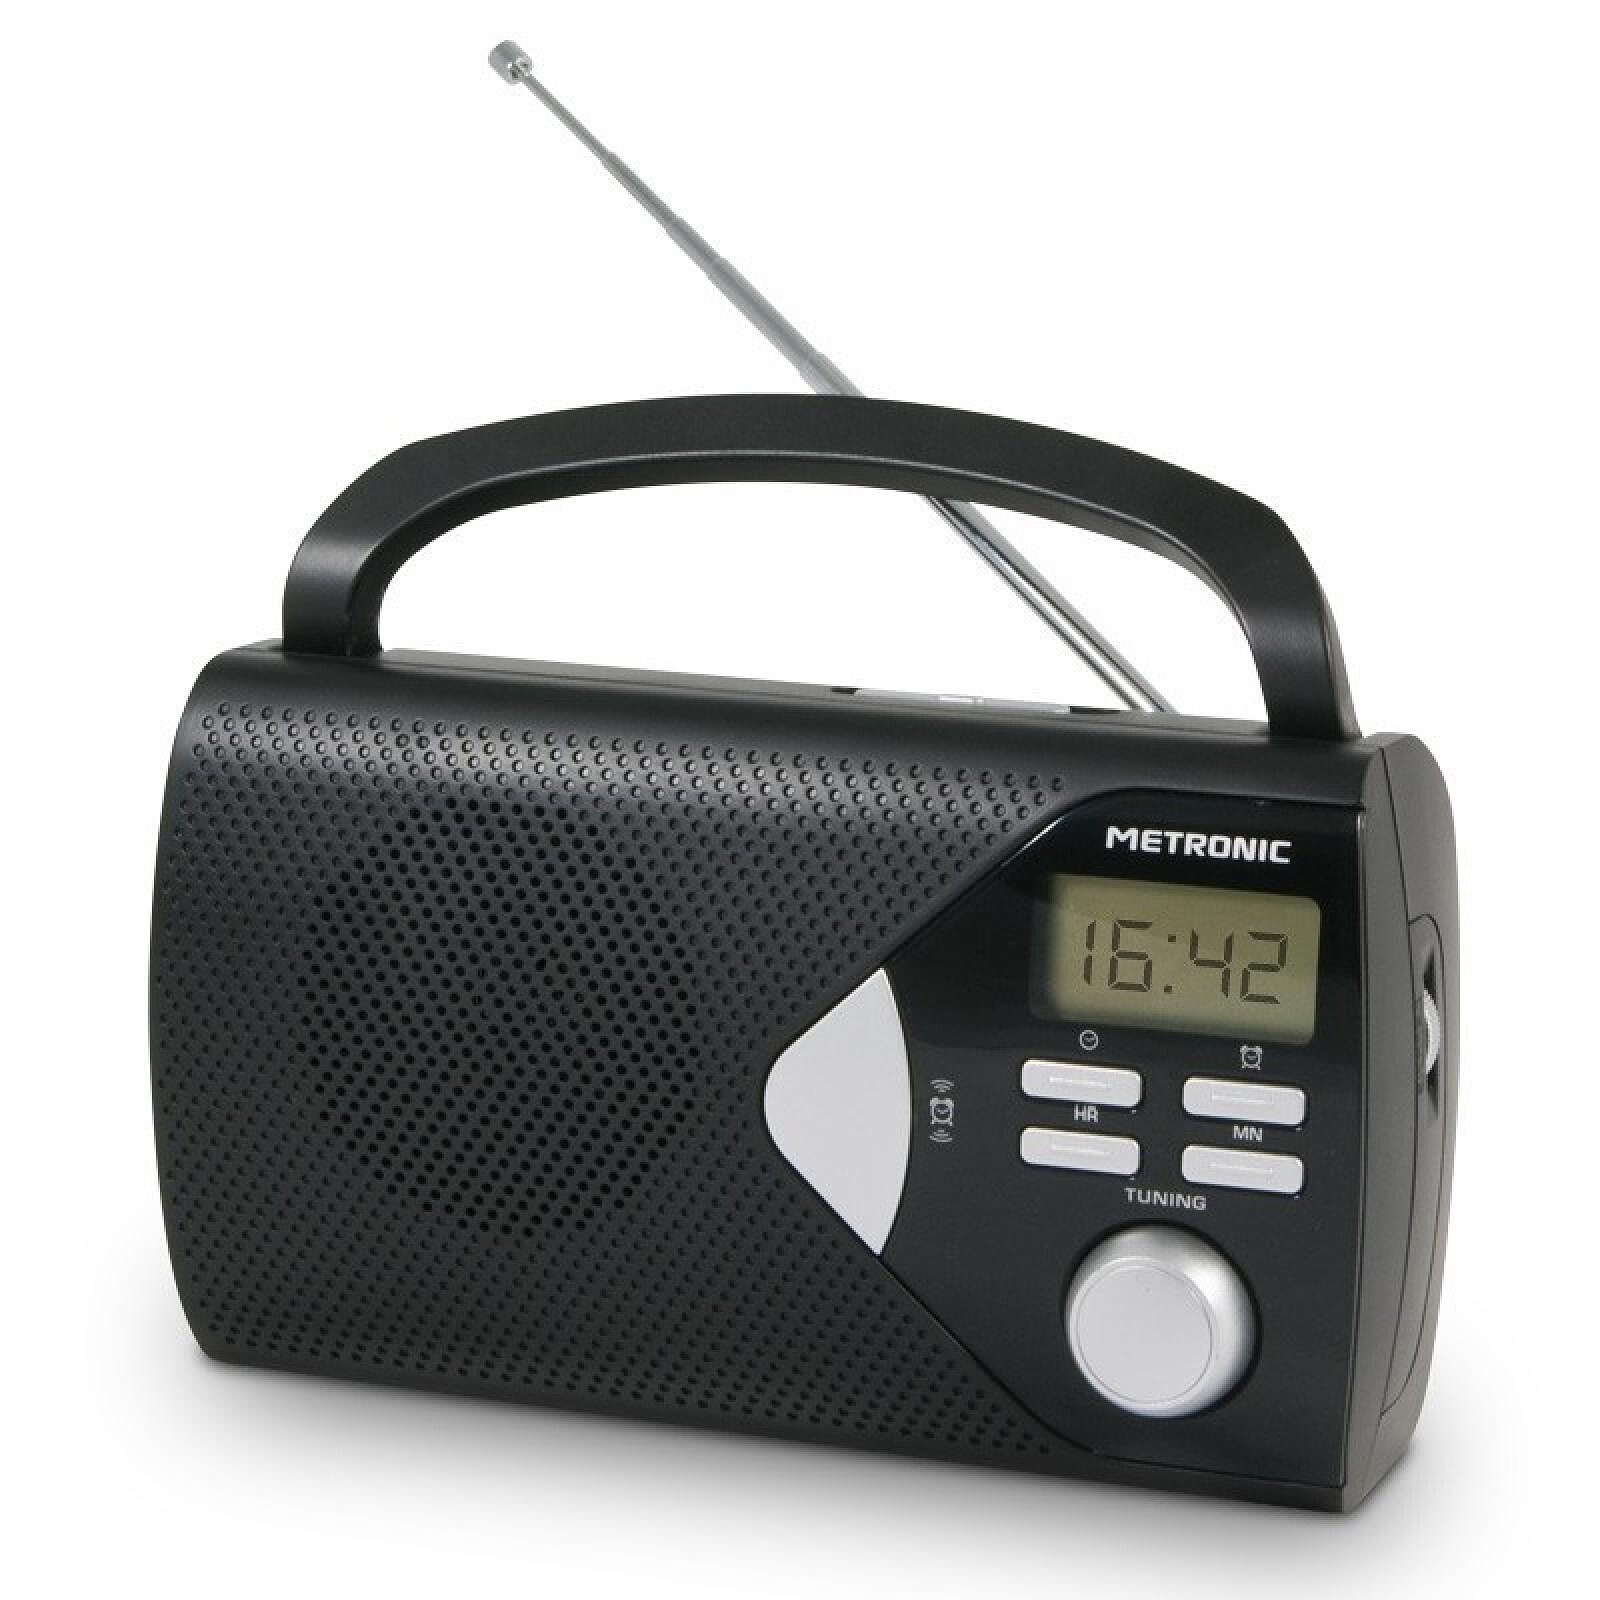 Metronic 477205 - Radio portable AM/FM avec fonction réveil - noir - Radio  & radio réveil - LDLC